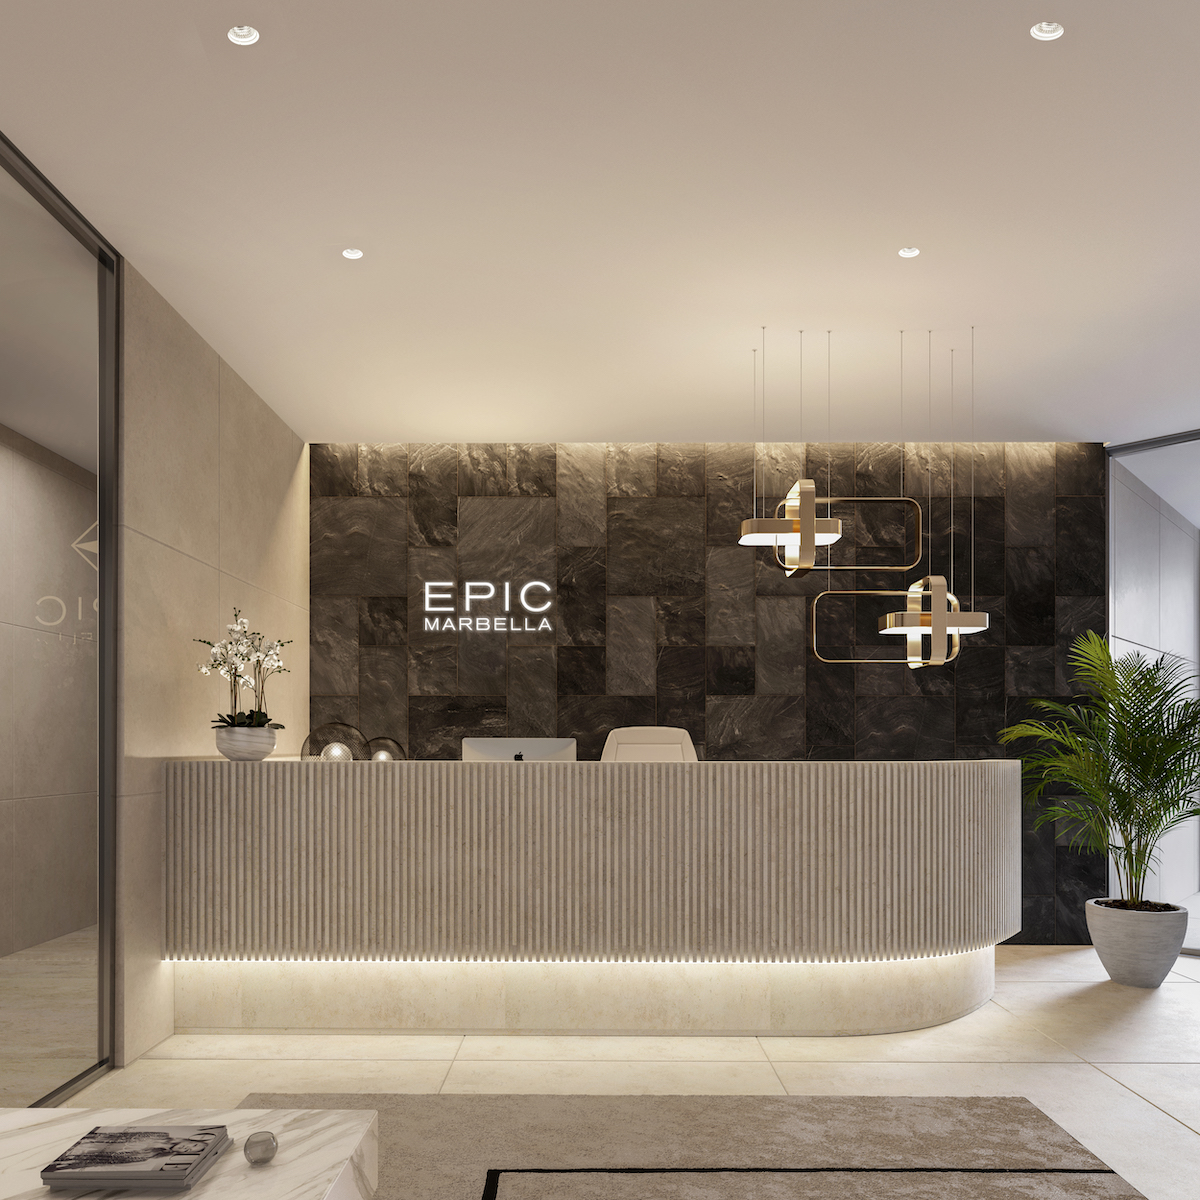 EPIC Marbella, furnished by FENDI CASA, Branded Residence, Golden Mile, Marbella, Spain